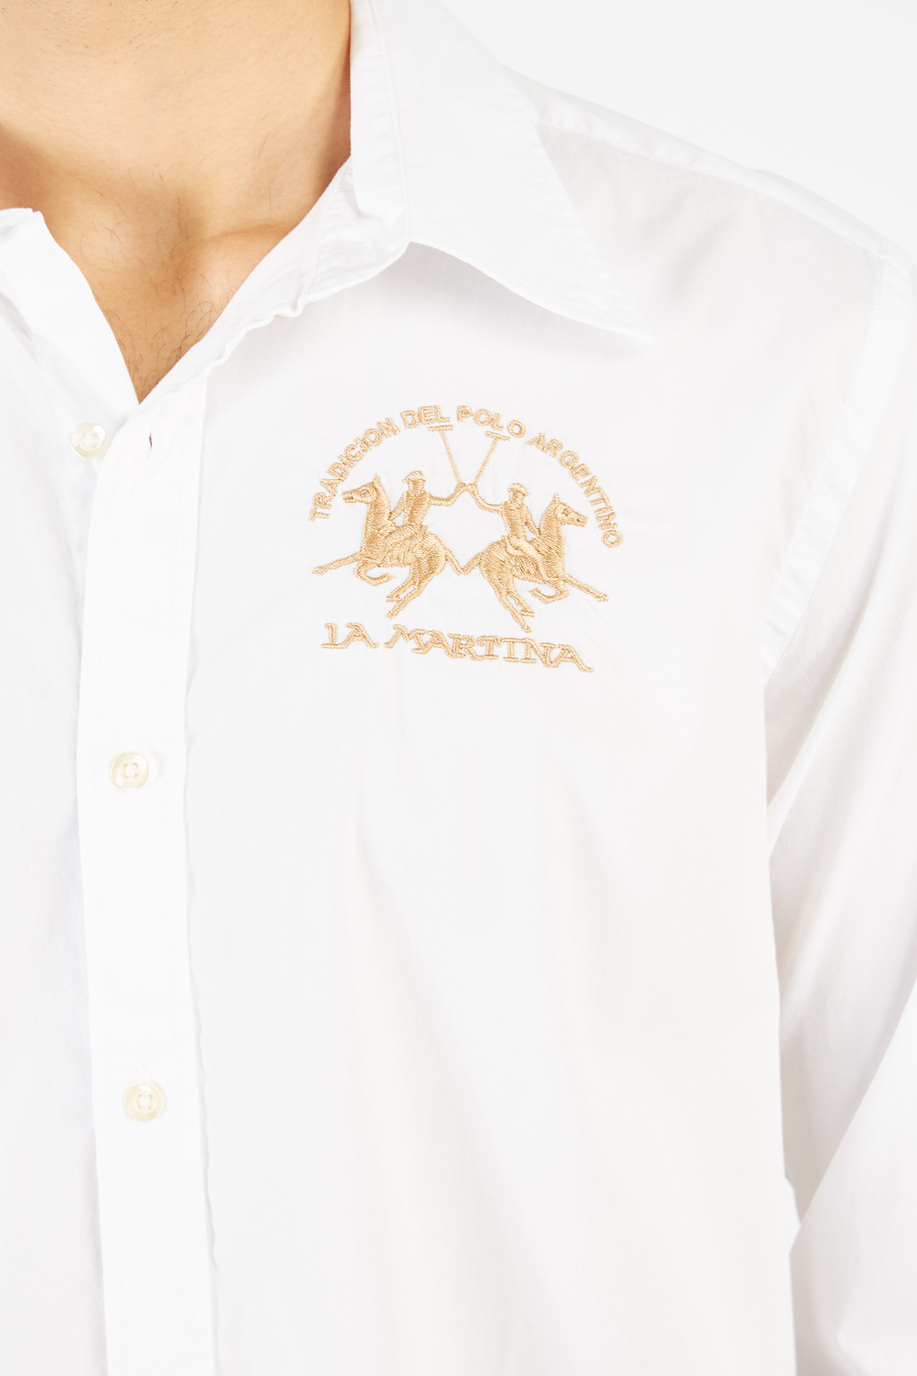 Camicia da uomo regular fit - Giftguide | La Martina - Official Online Shop